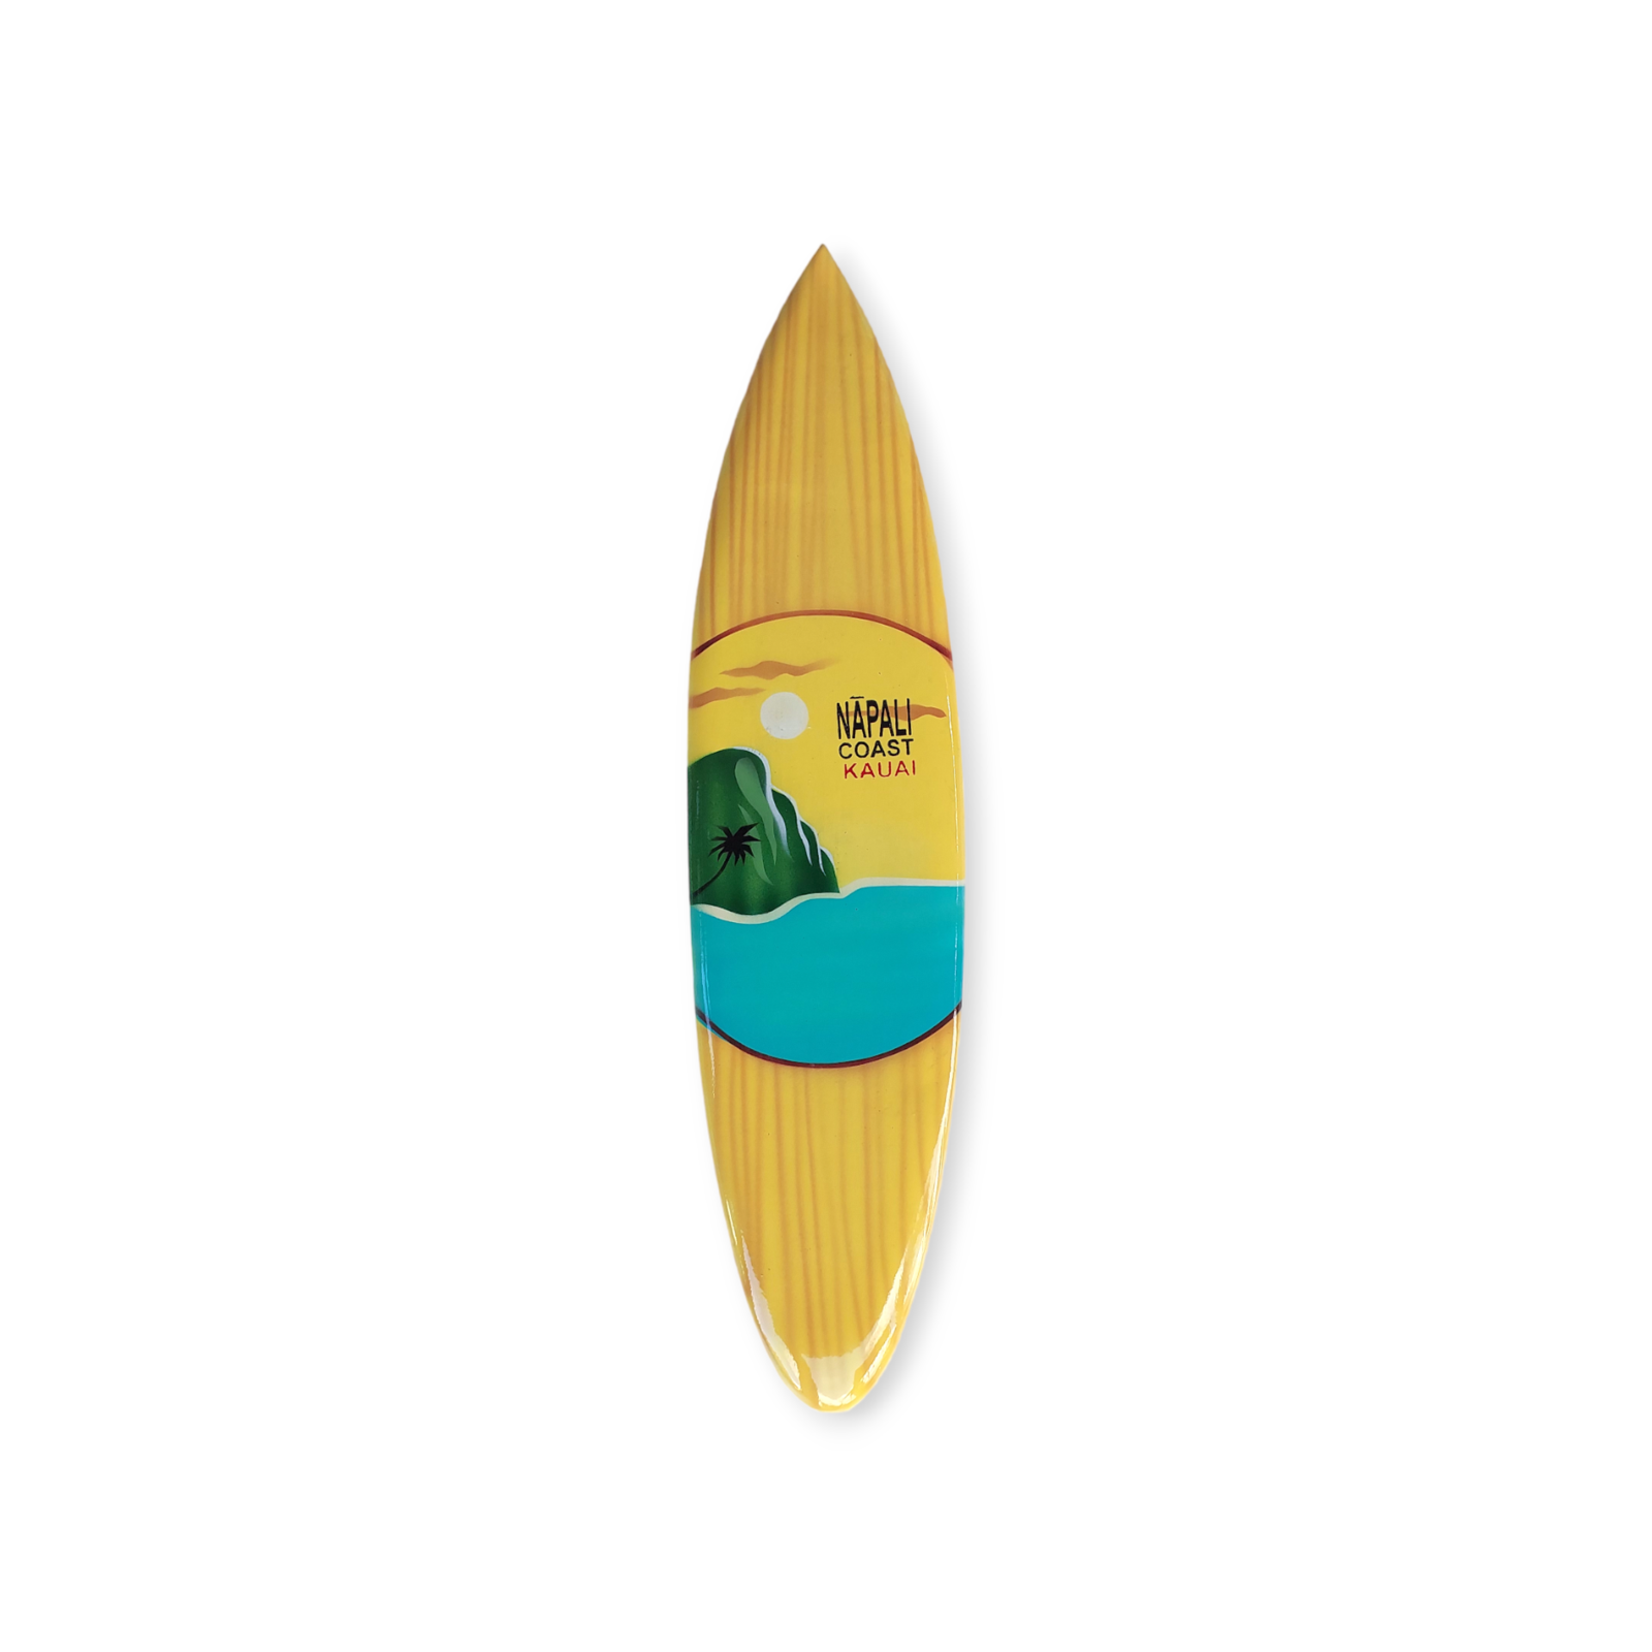 Airbrushed Wood Napali Coast Kauai Surfboard Small #4AB